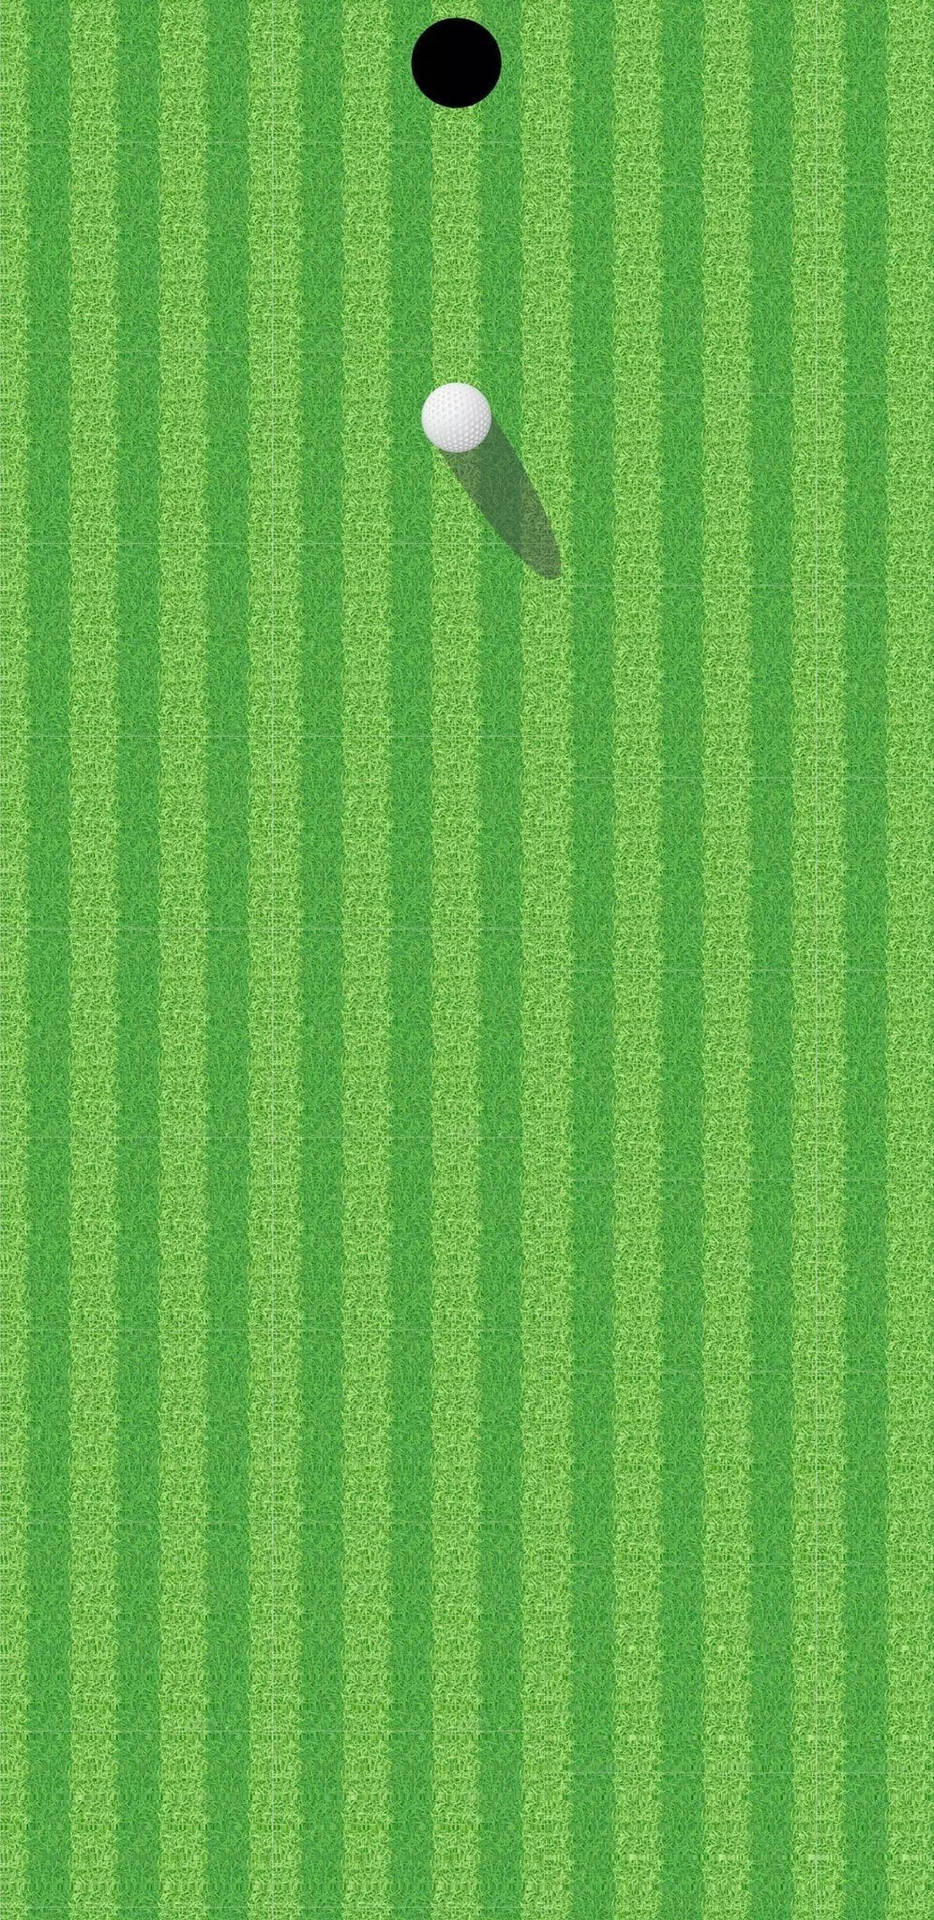 Golfballredmi Note 9 Punch Hole. Wallpaper